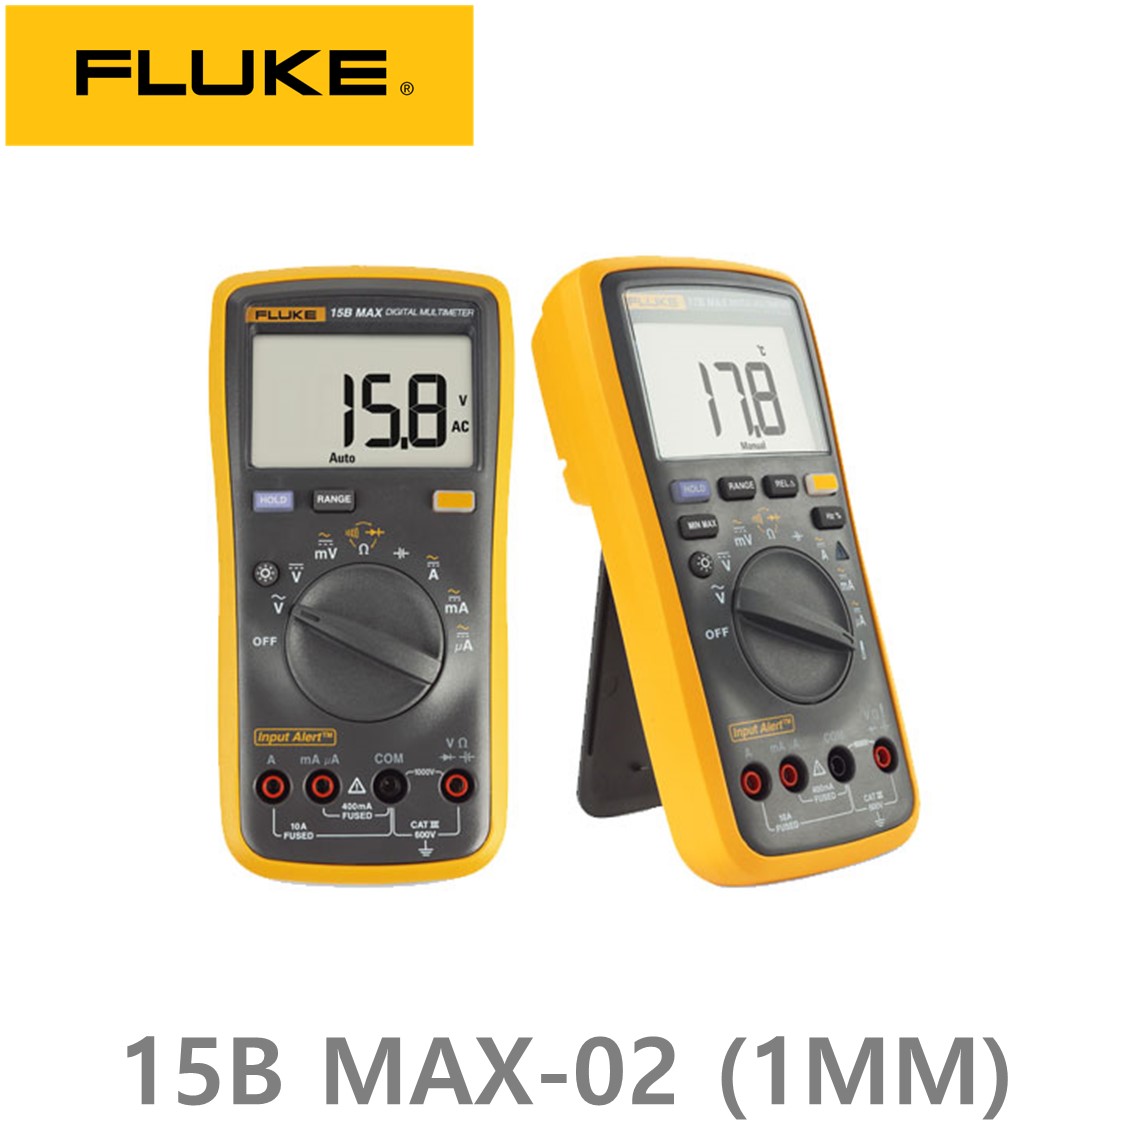 [ FLUKE 15B MAX-02 ] 정품 플루크 15B MAX 멀티미터, 테스터기, 1MM 테스트리드